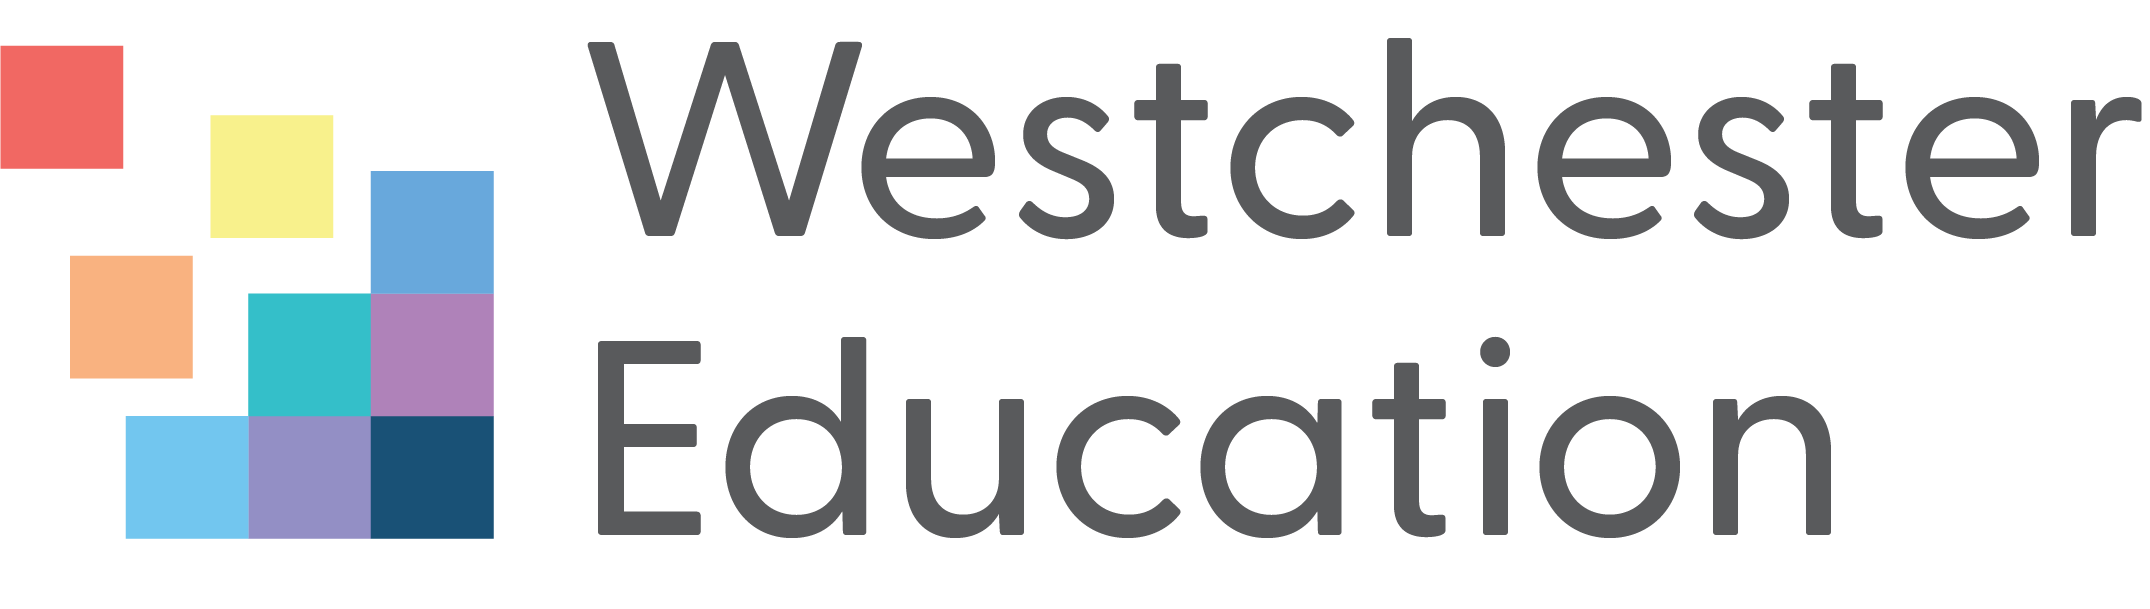 Westchester Education